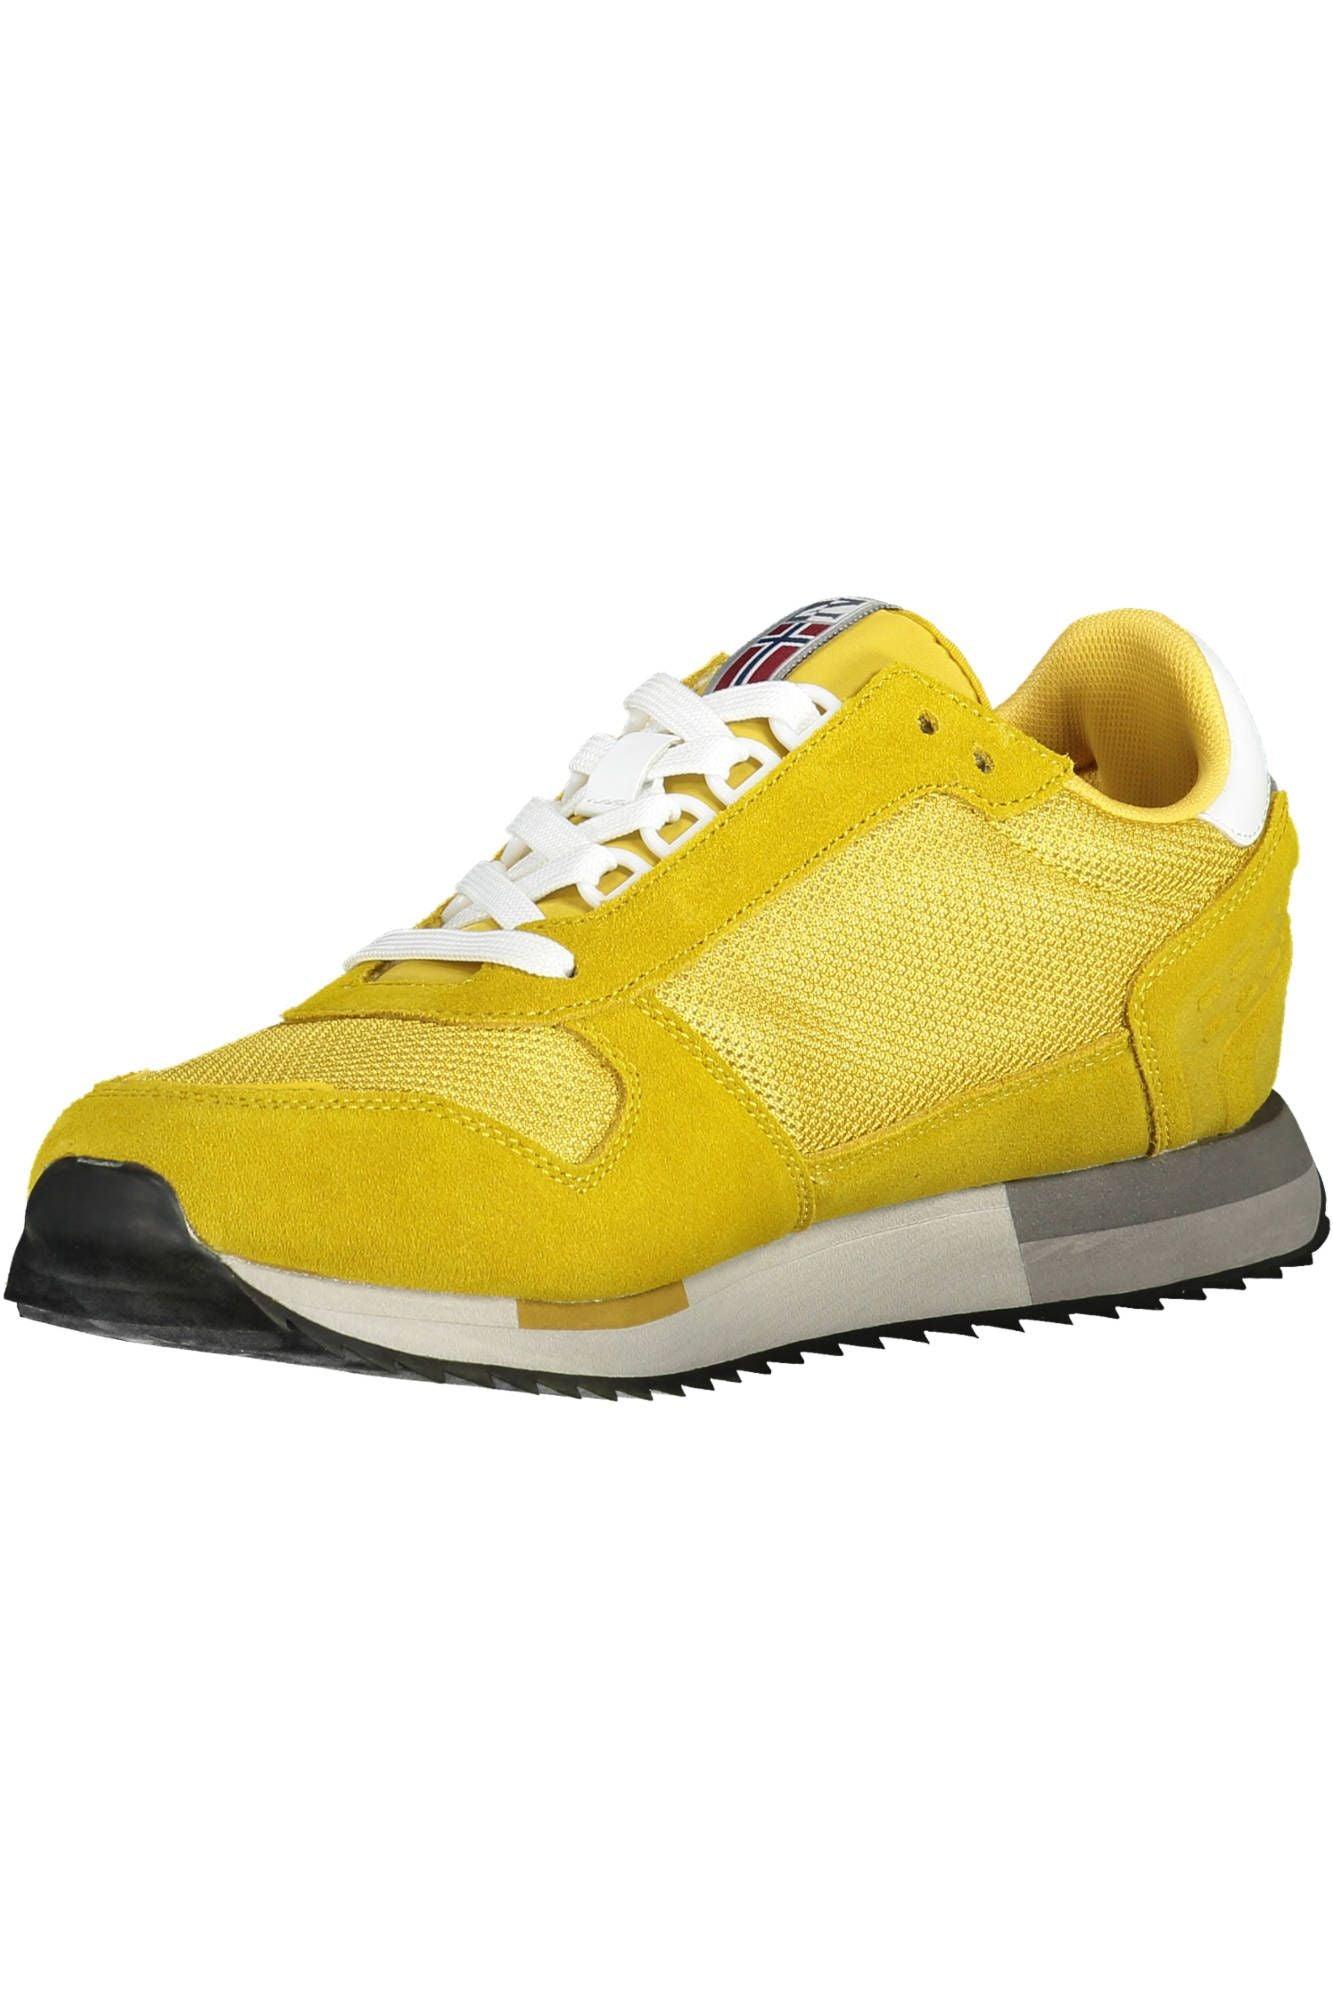 Napapijri Vibrant Yellow Lace-Up Sporty Sneakers - PER.FASHION